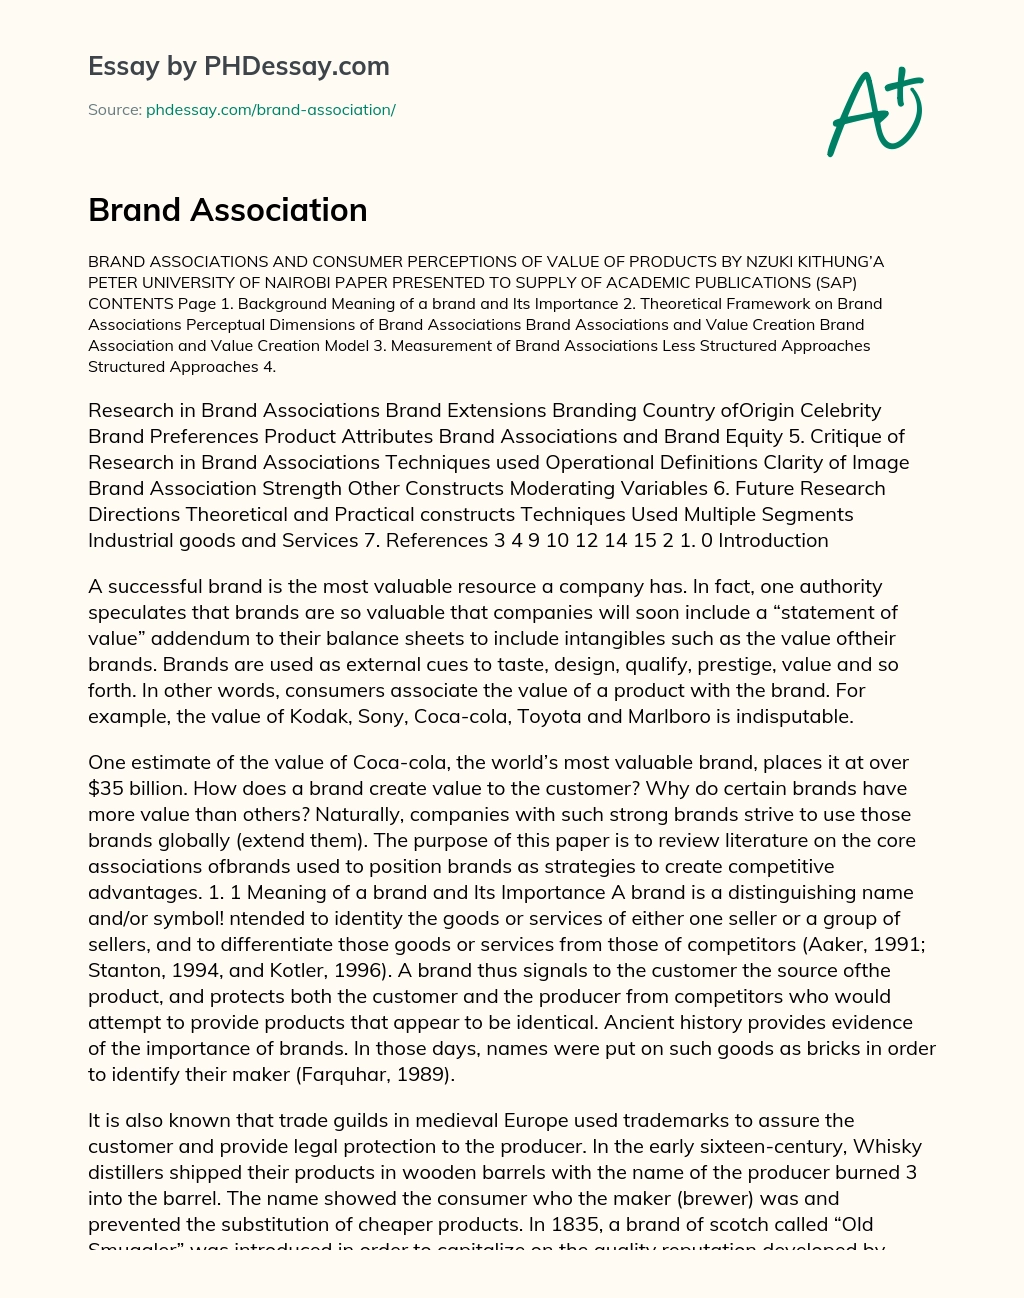 Brand Association essay